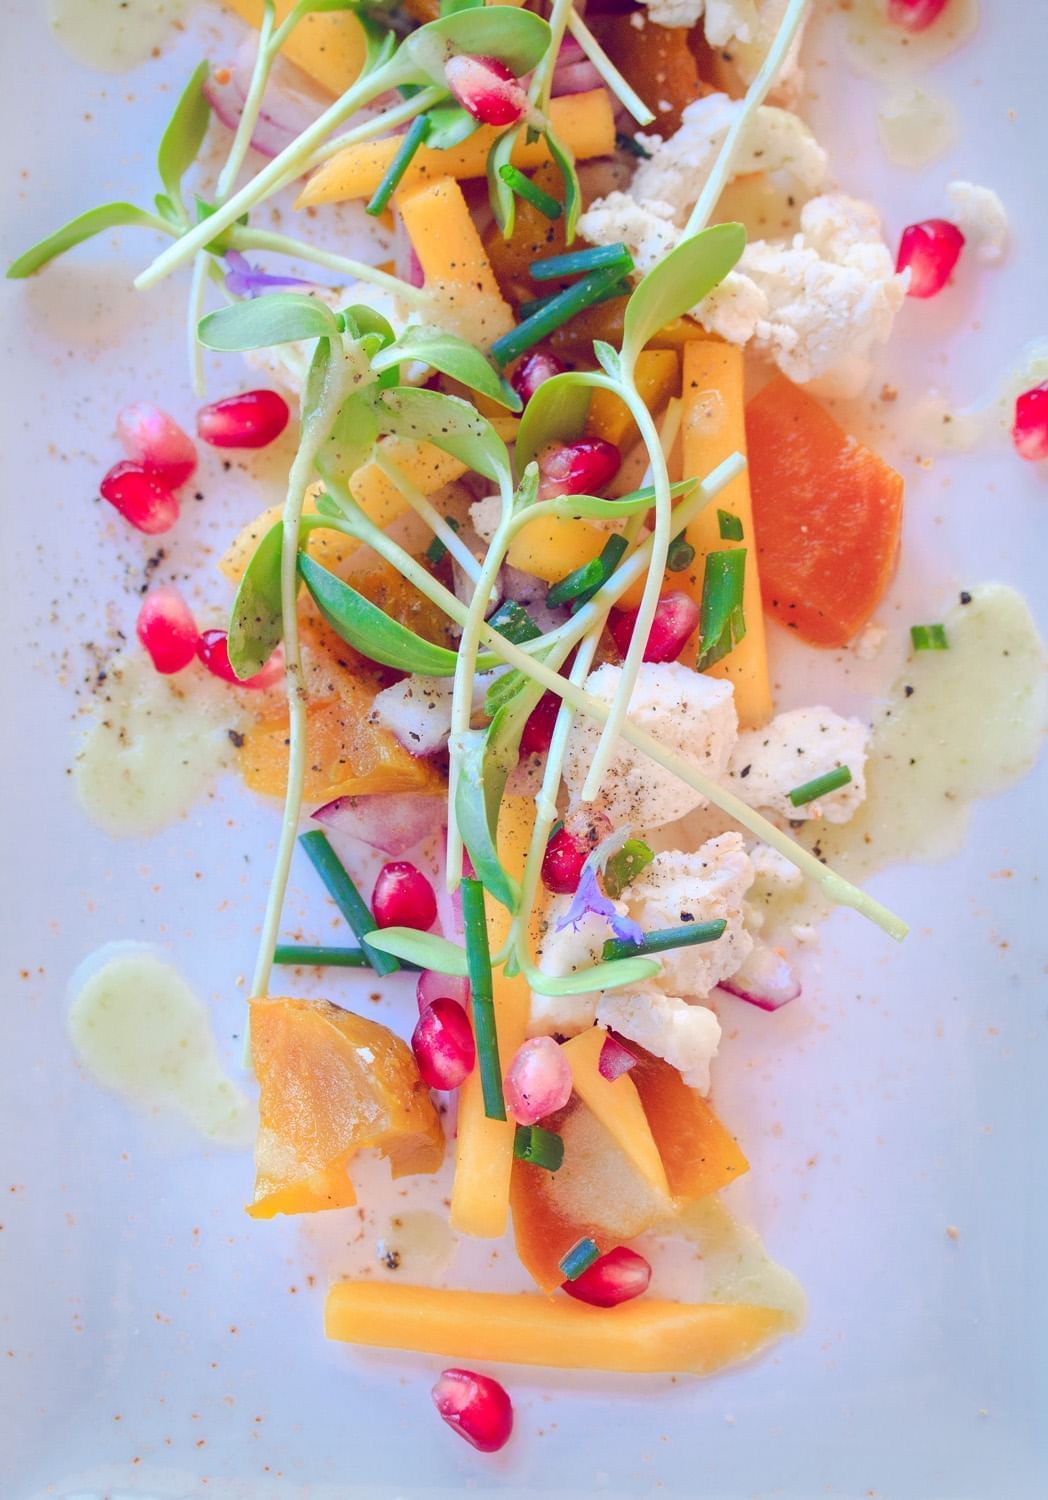 A fresh vibrant salad prepared at Cello Restaurant 